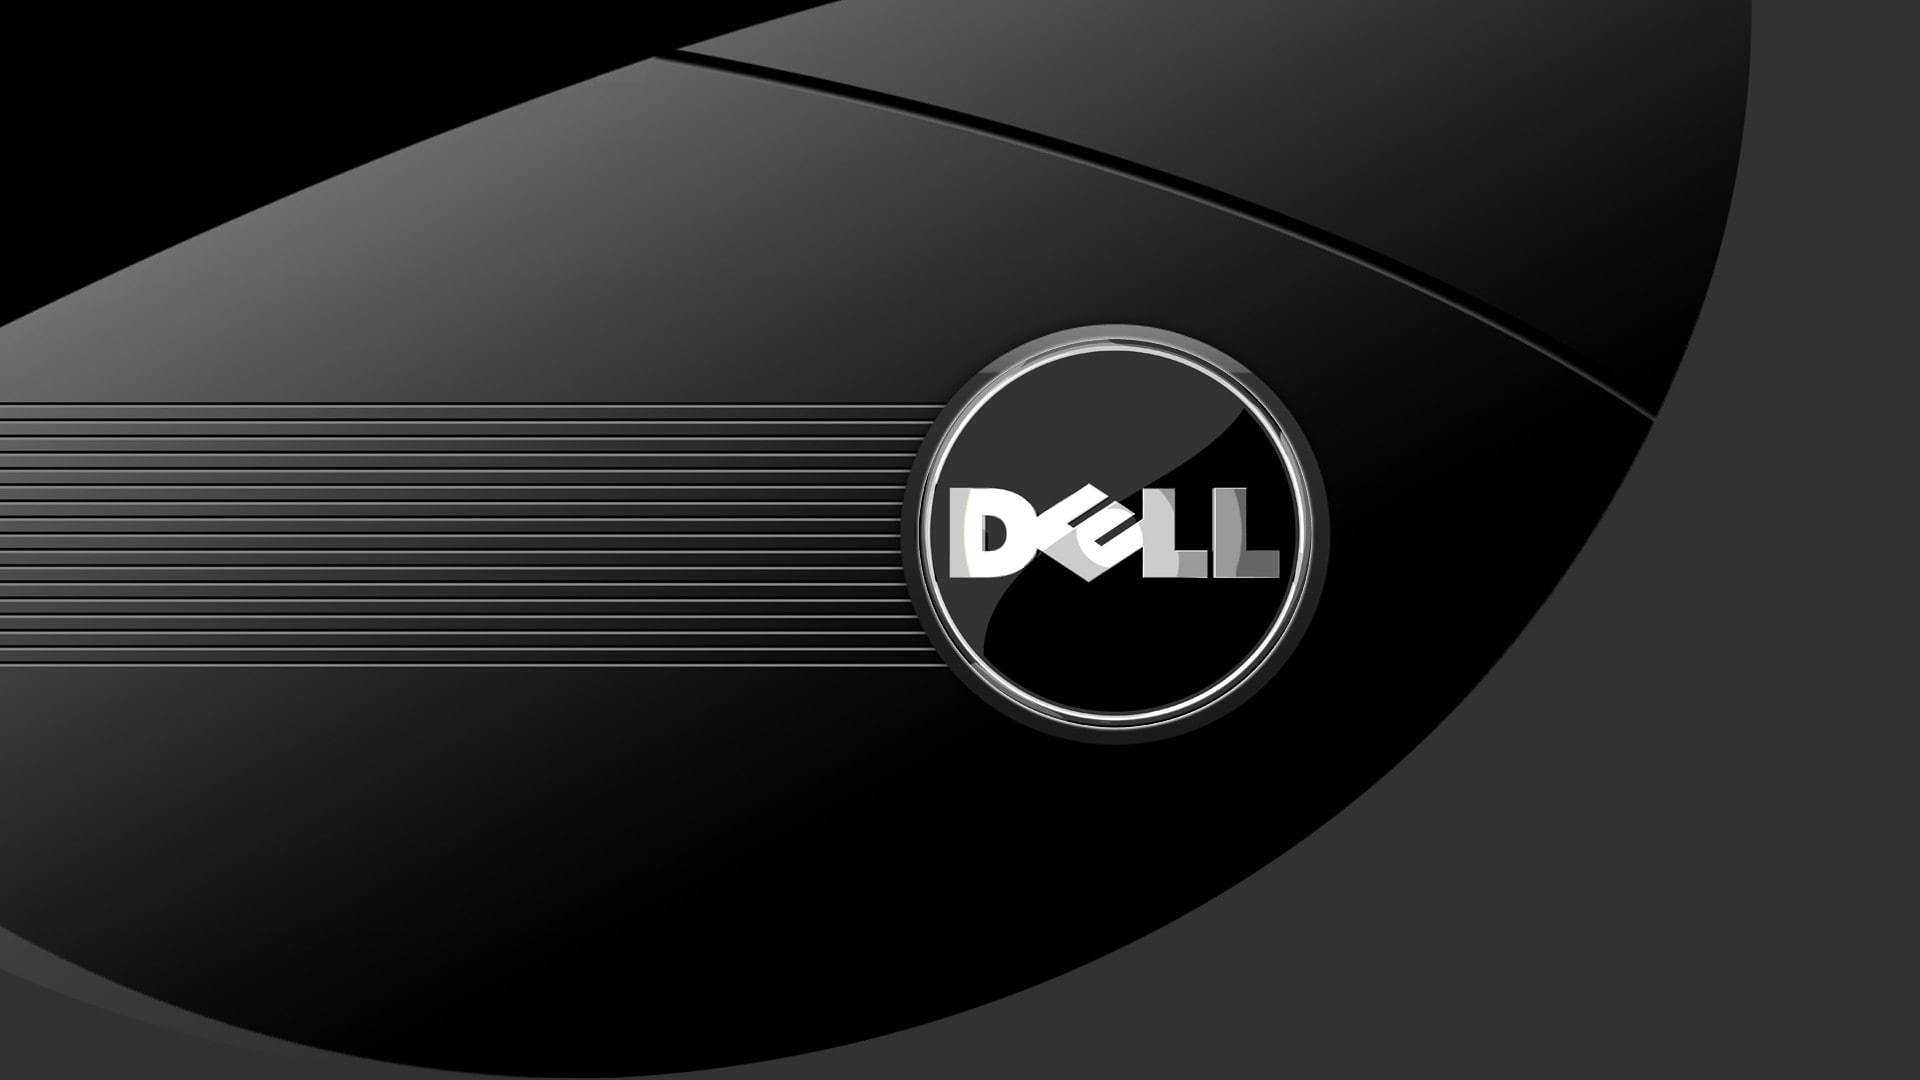 Dell, computer, hardware, geometric shape, circle, close-up